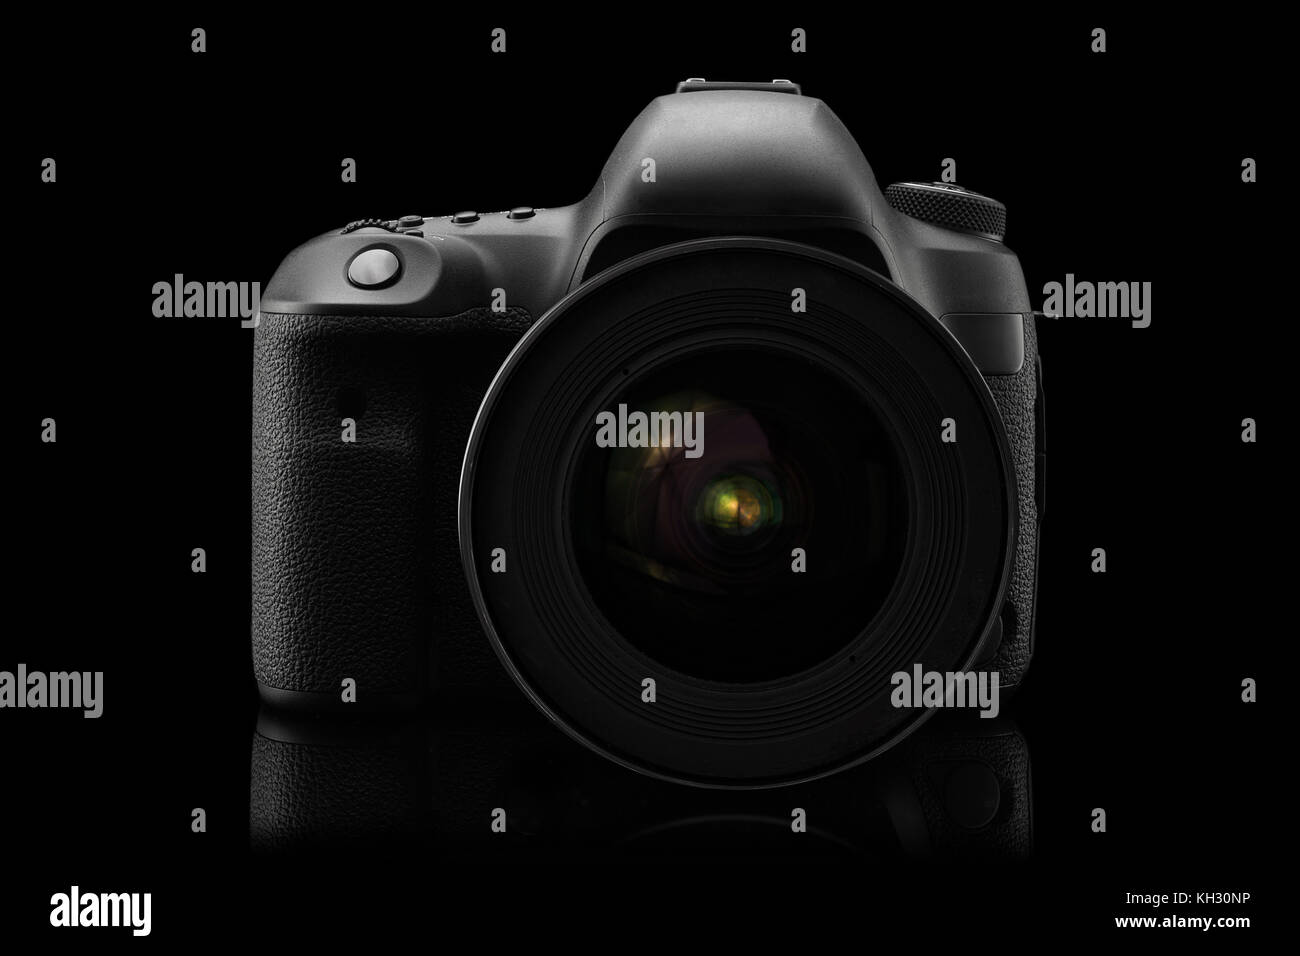 Isolated SLR camera on a black background Stock Photo